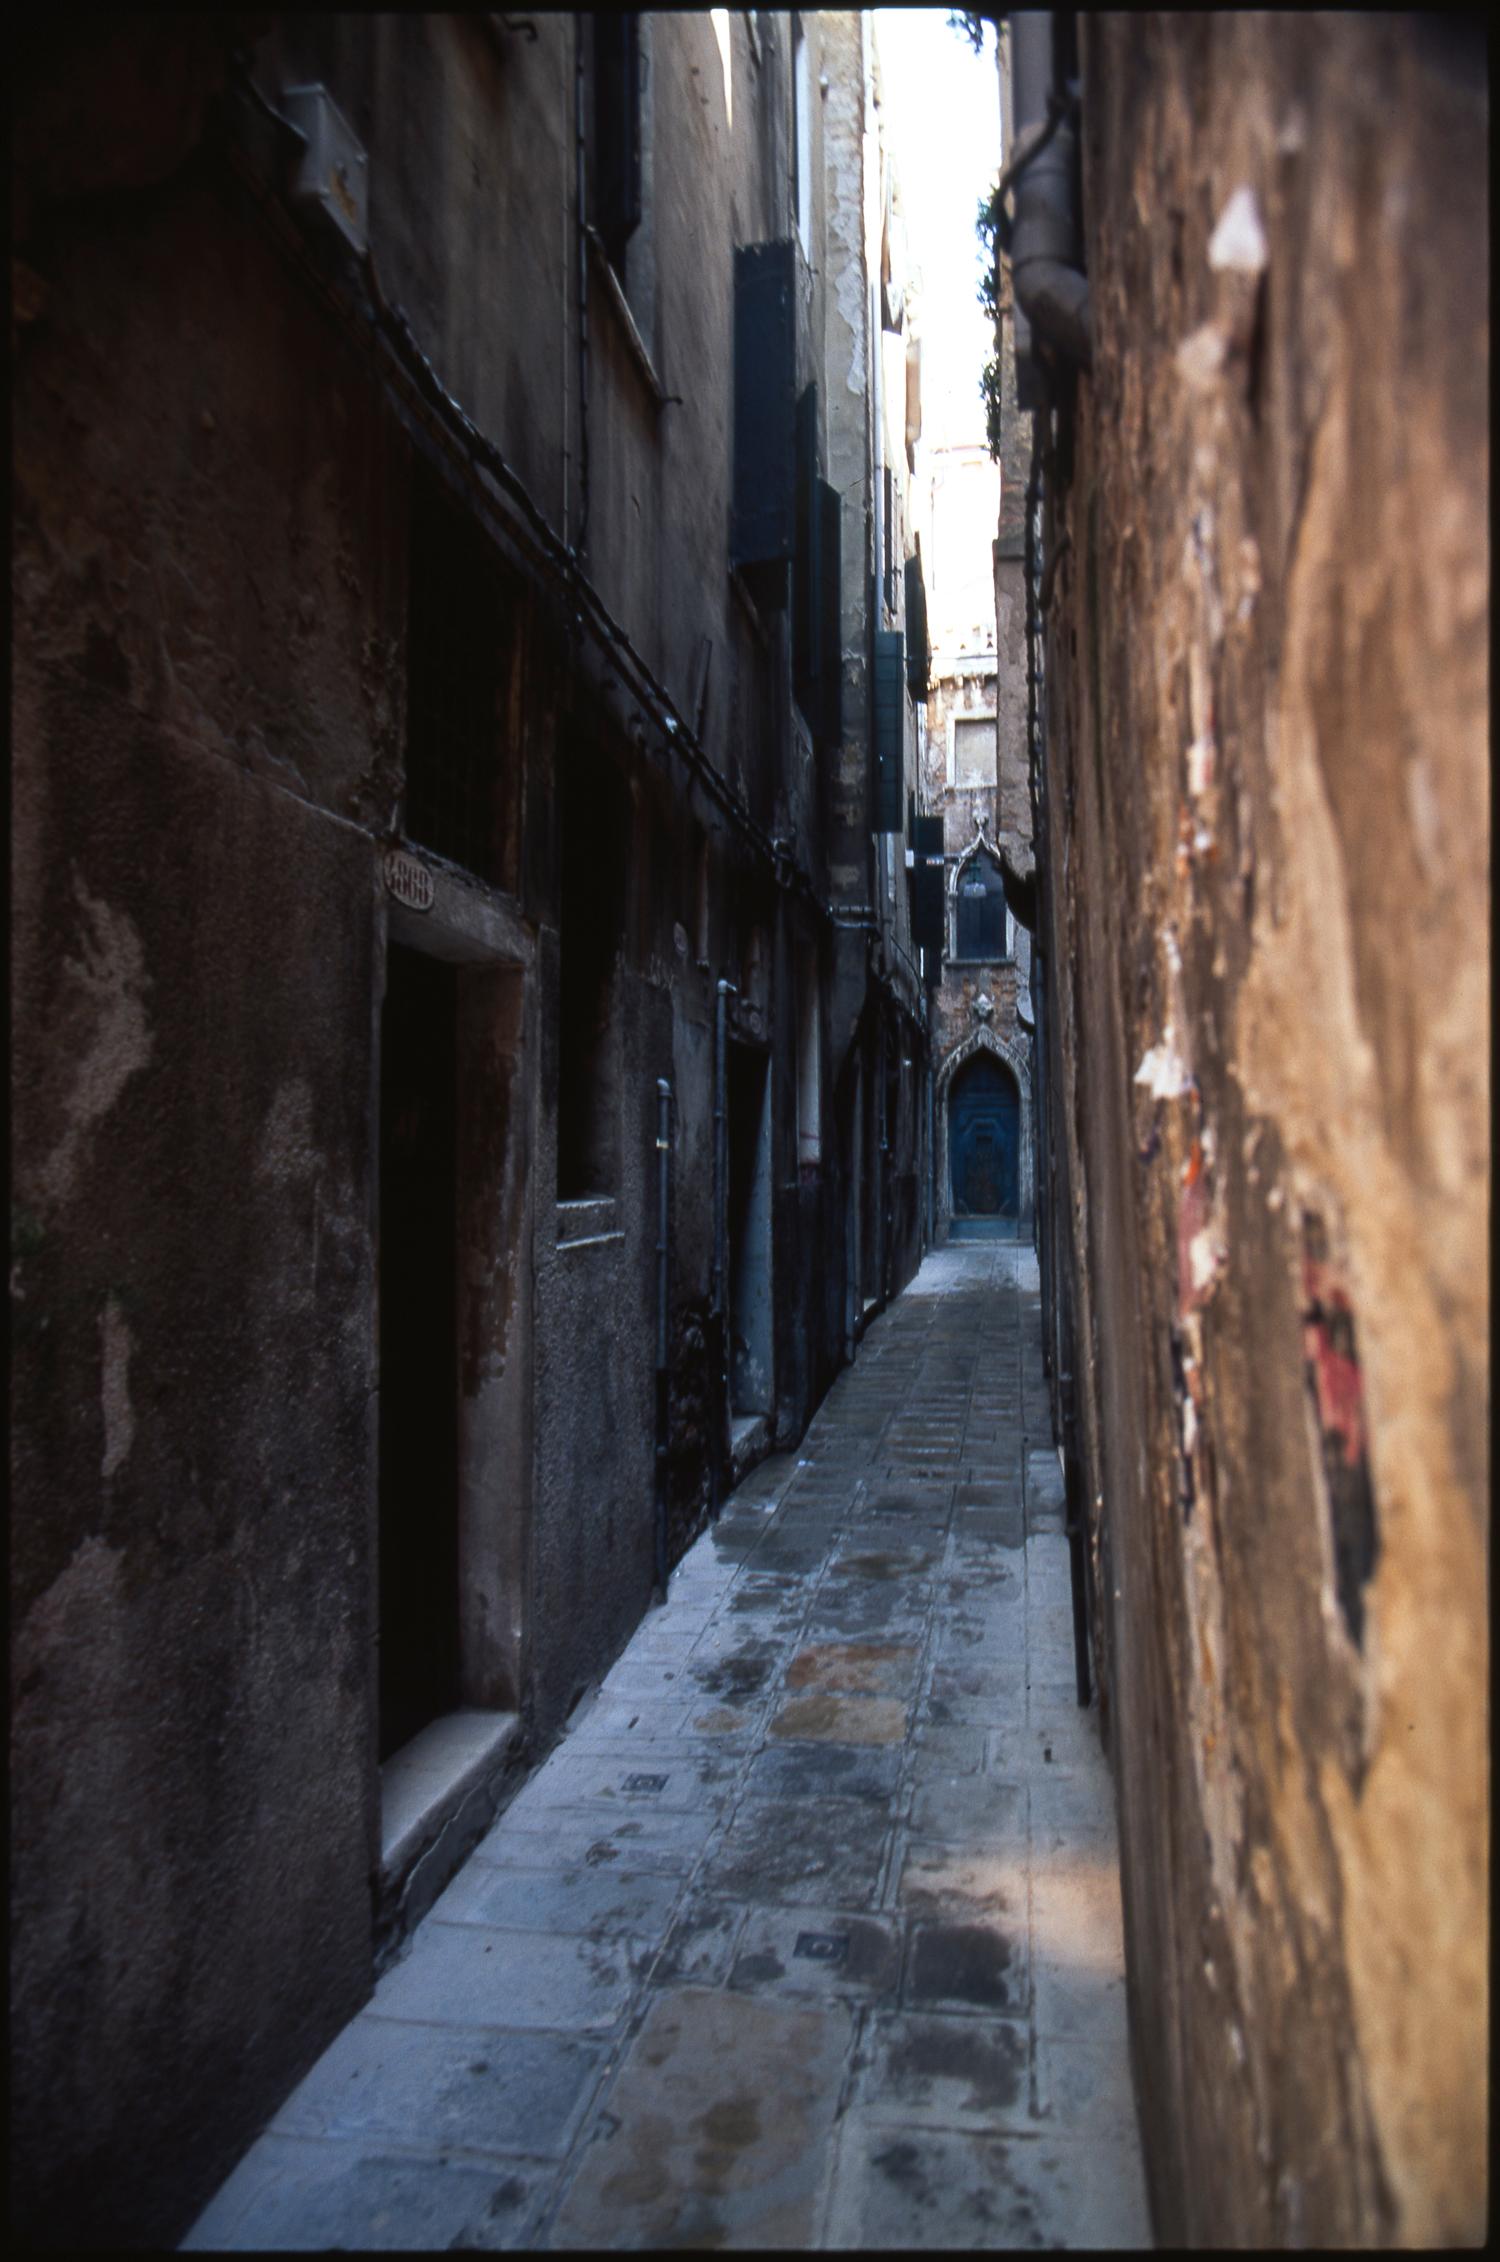 Paul Cooklin Color Photograph - Edition 1/10 - Passageway, Venice, Italy, C-Type Photograph